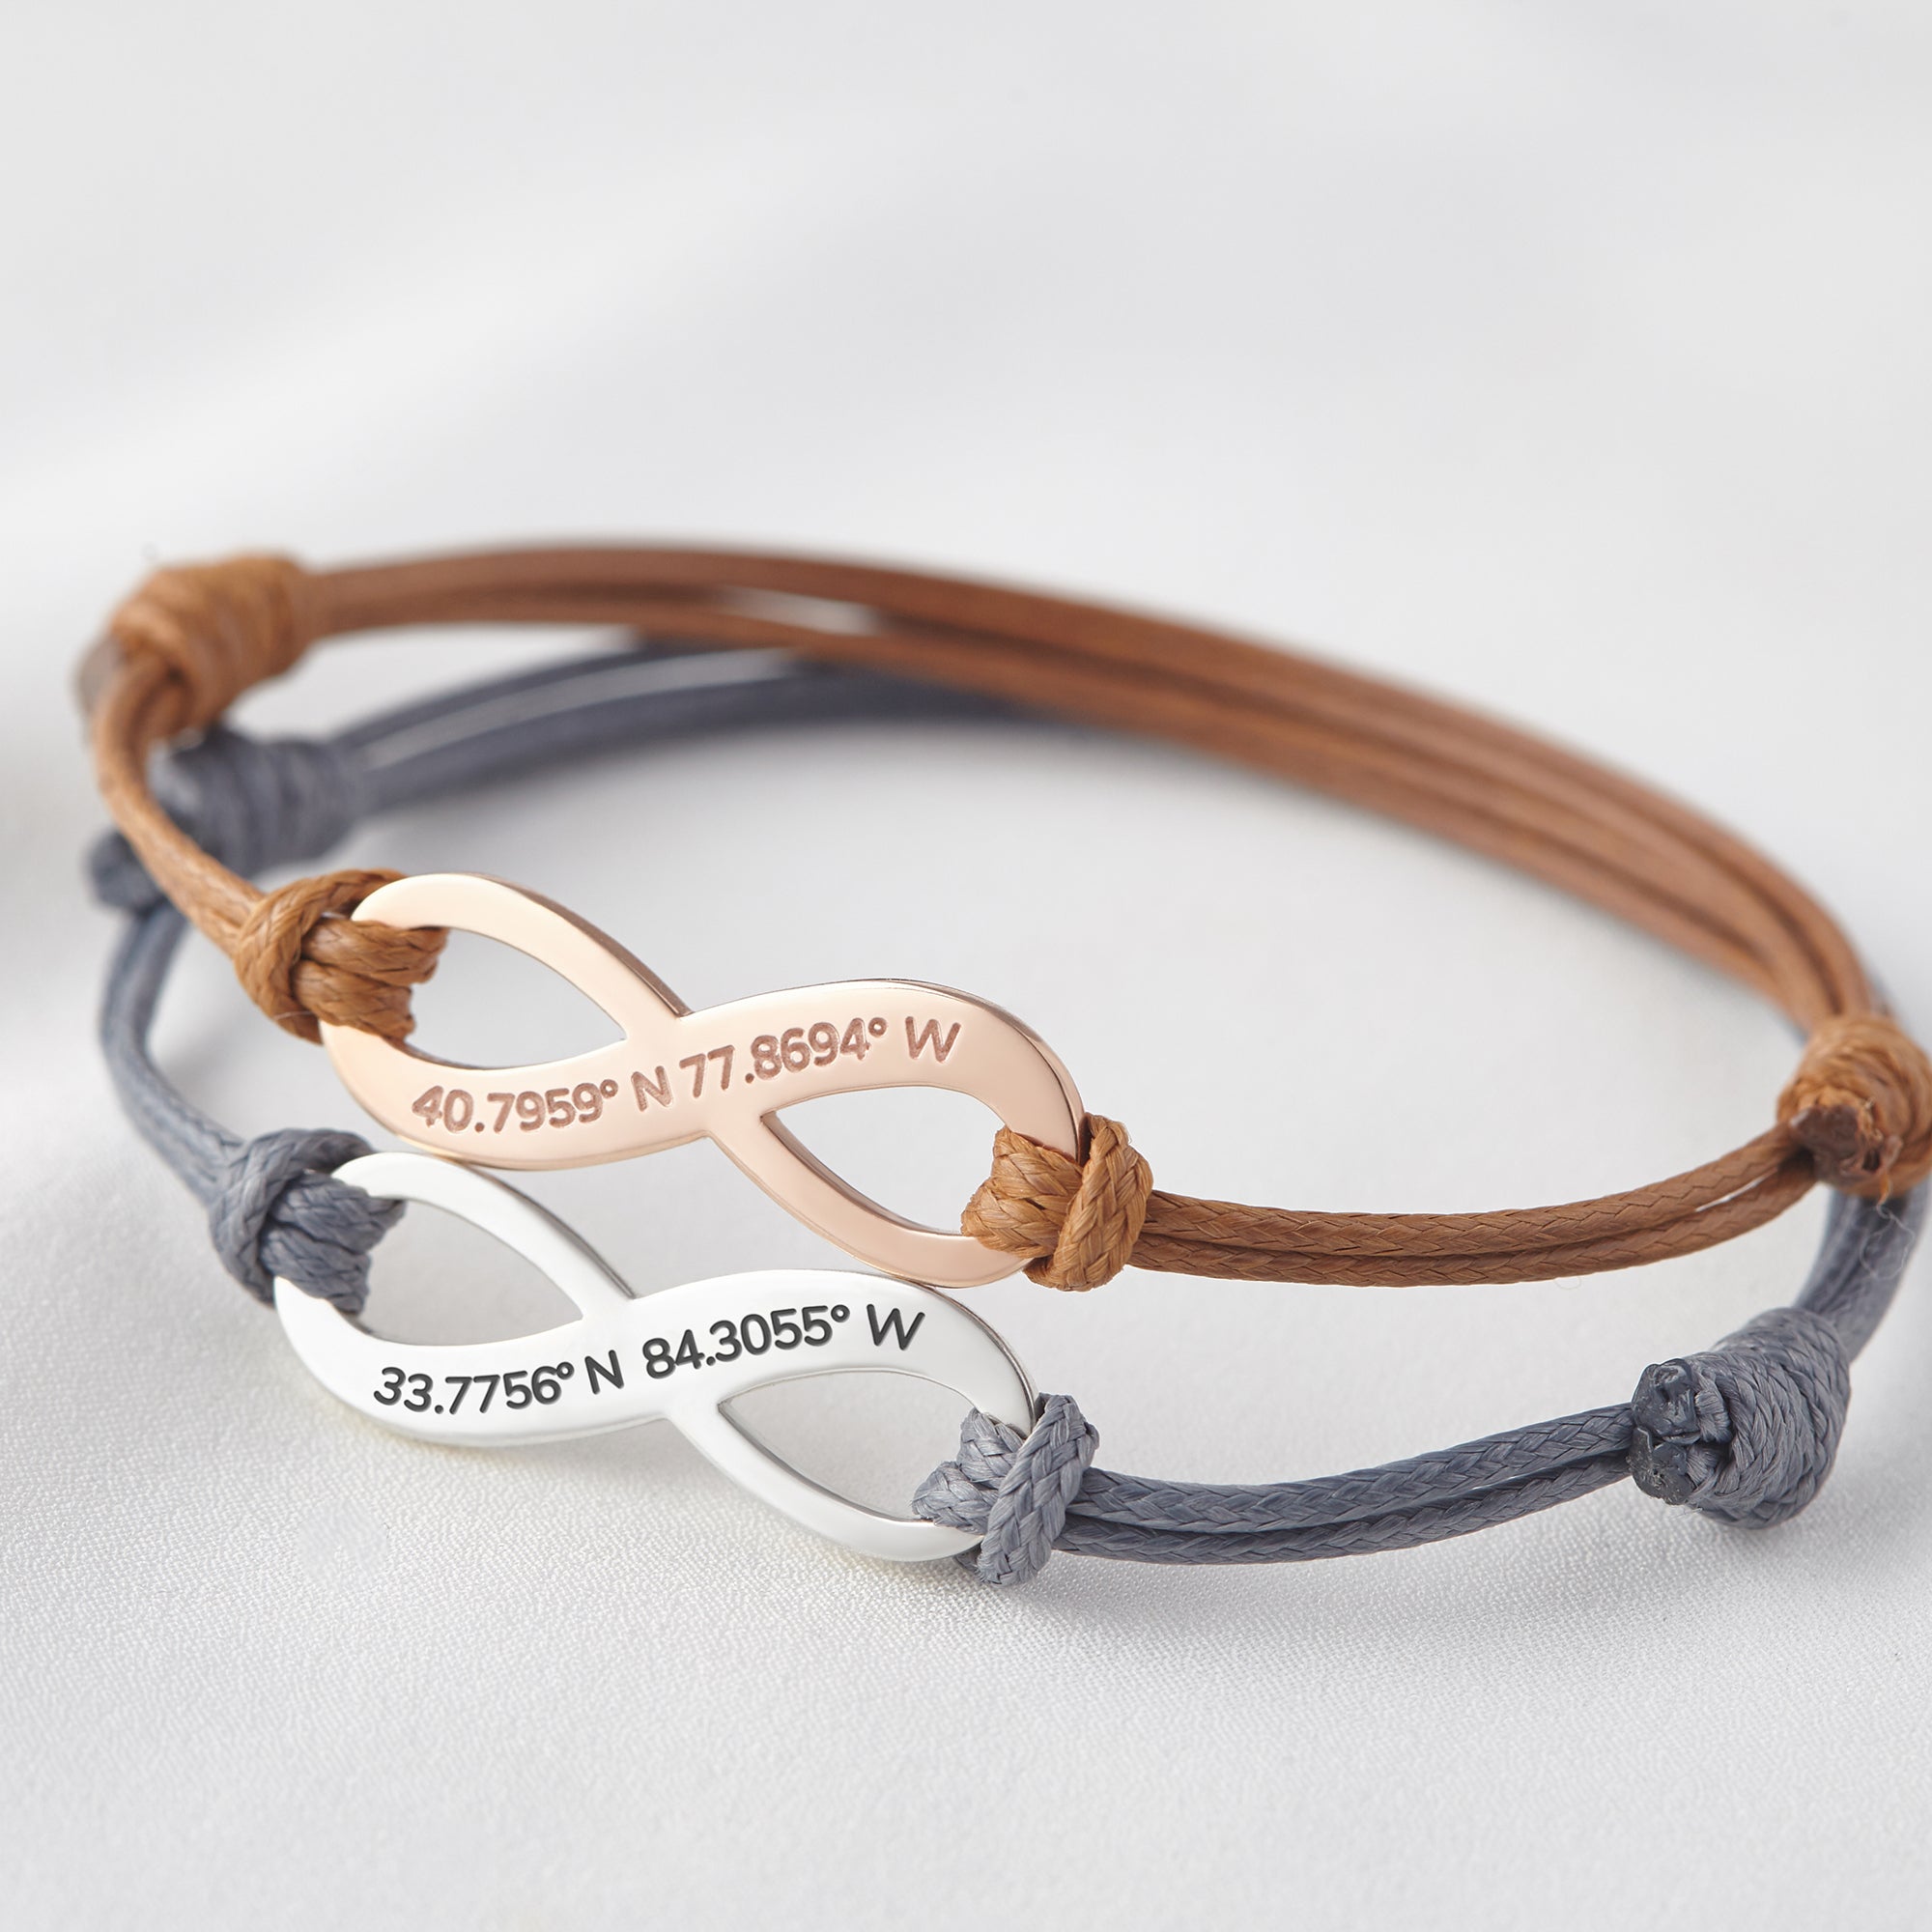 Adjustable Leather Coordinate Bracelet - Latitude Longitude Jewelry for Graduation or Moving Away Gift Bijou Her